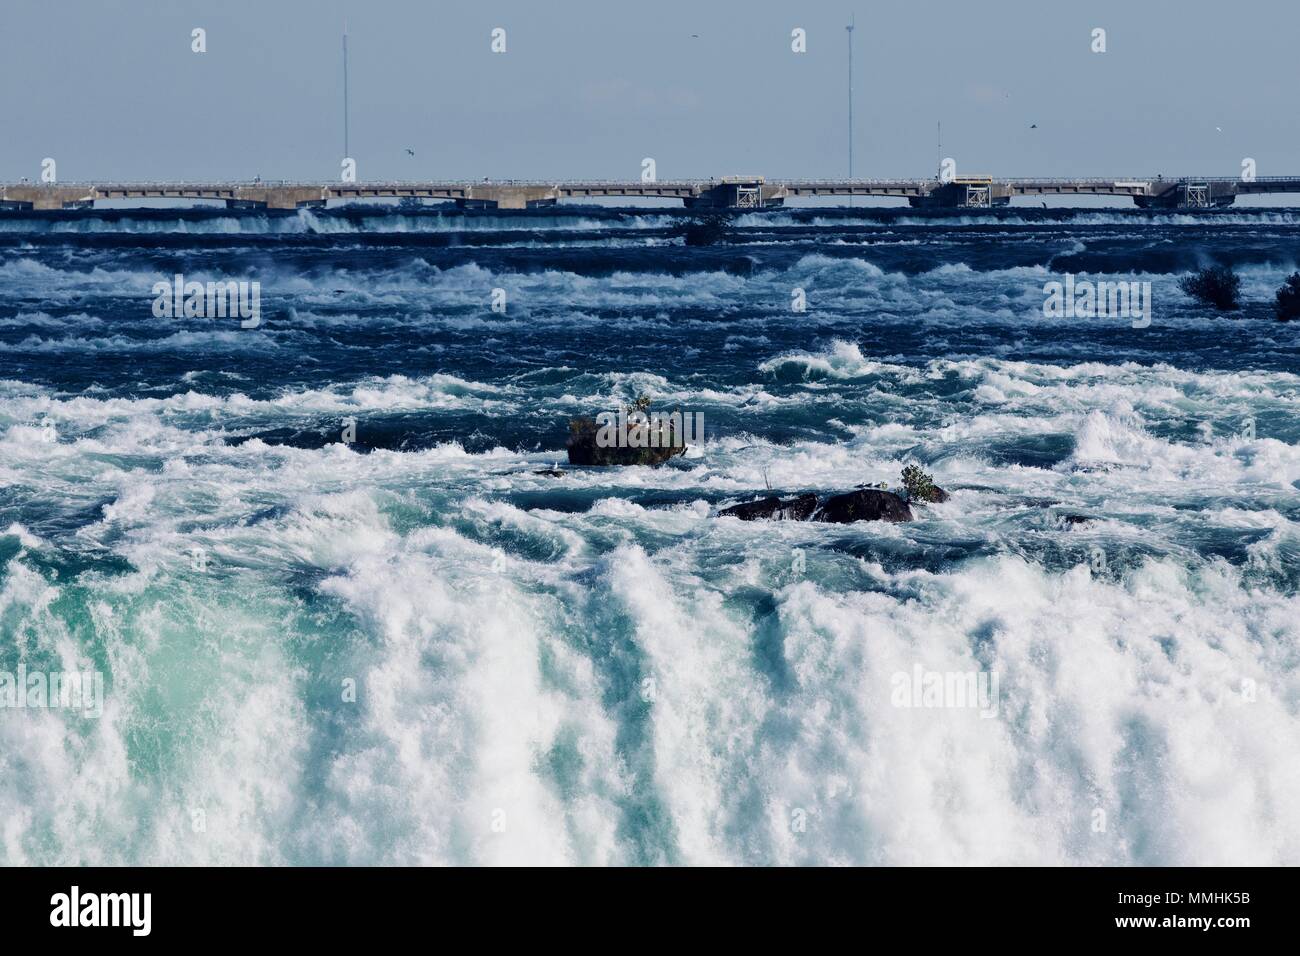 Background with an amazing Niagara waterfall Stock Photo